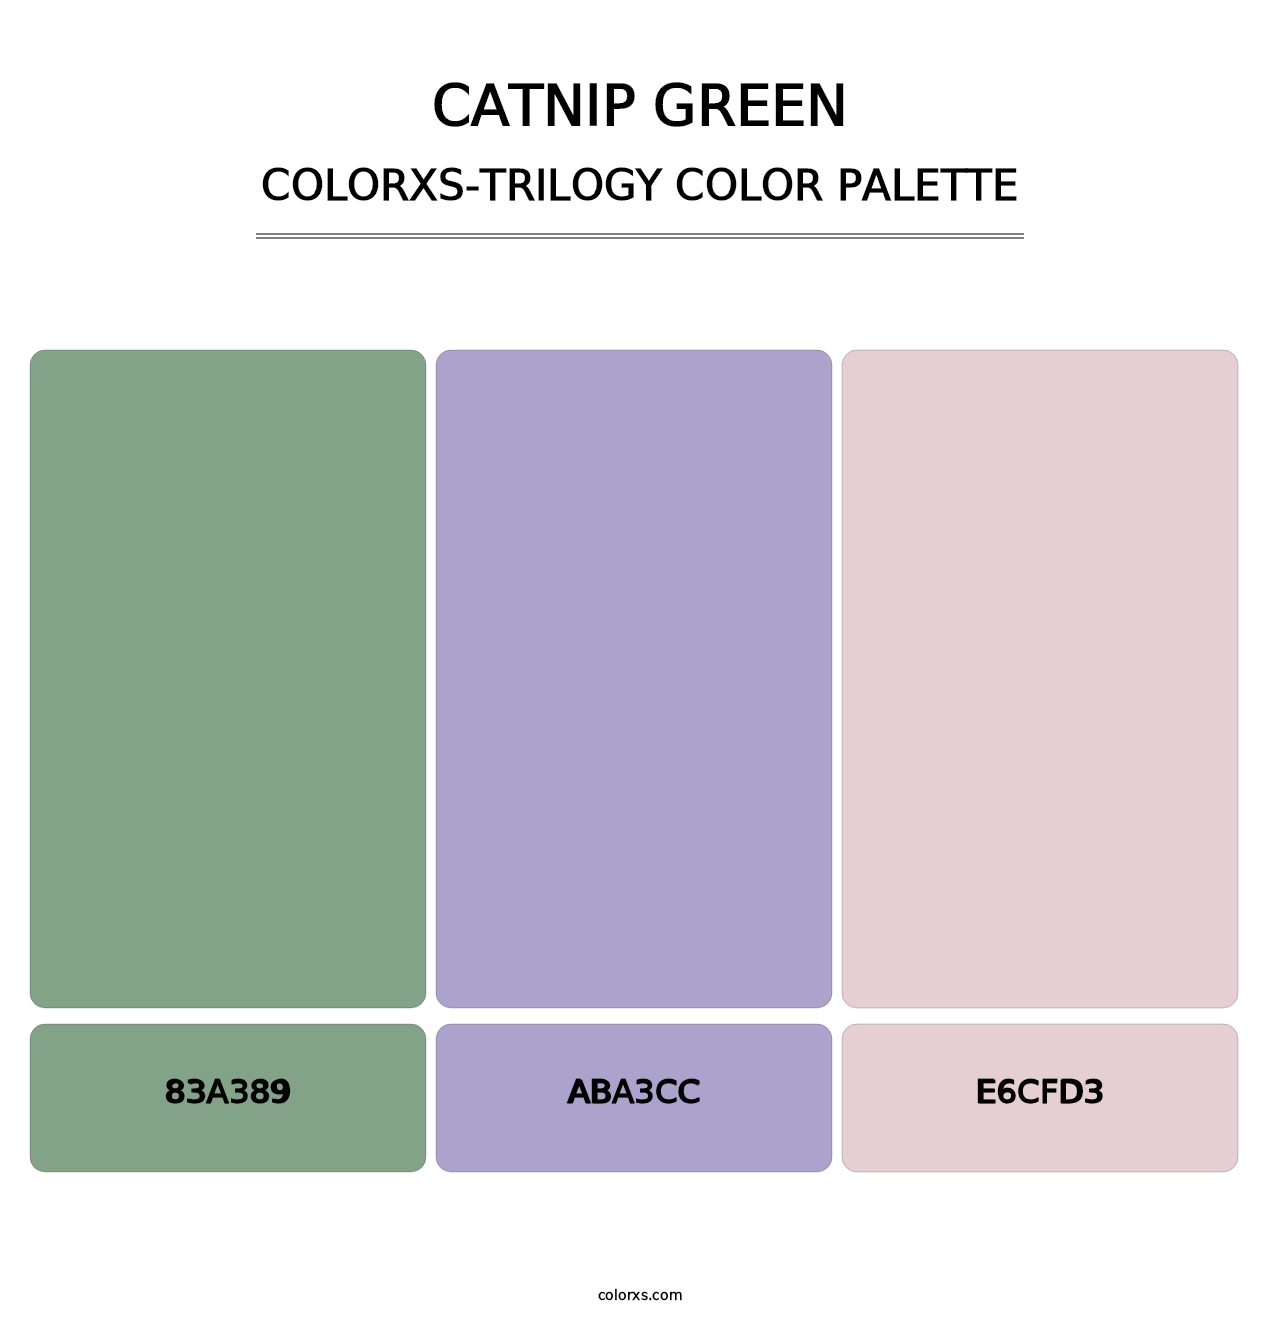 Catnip Green - Colorxs Trilogy Palette